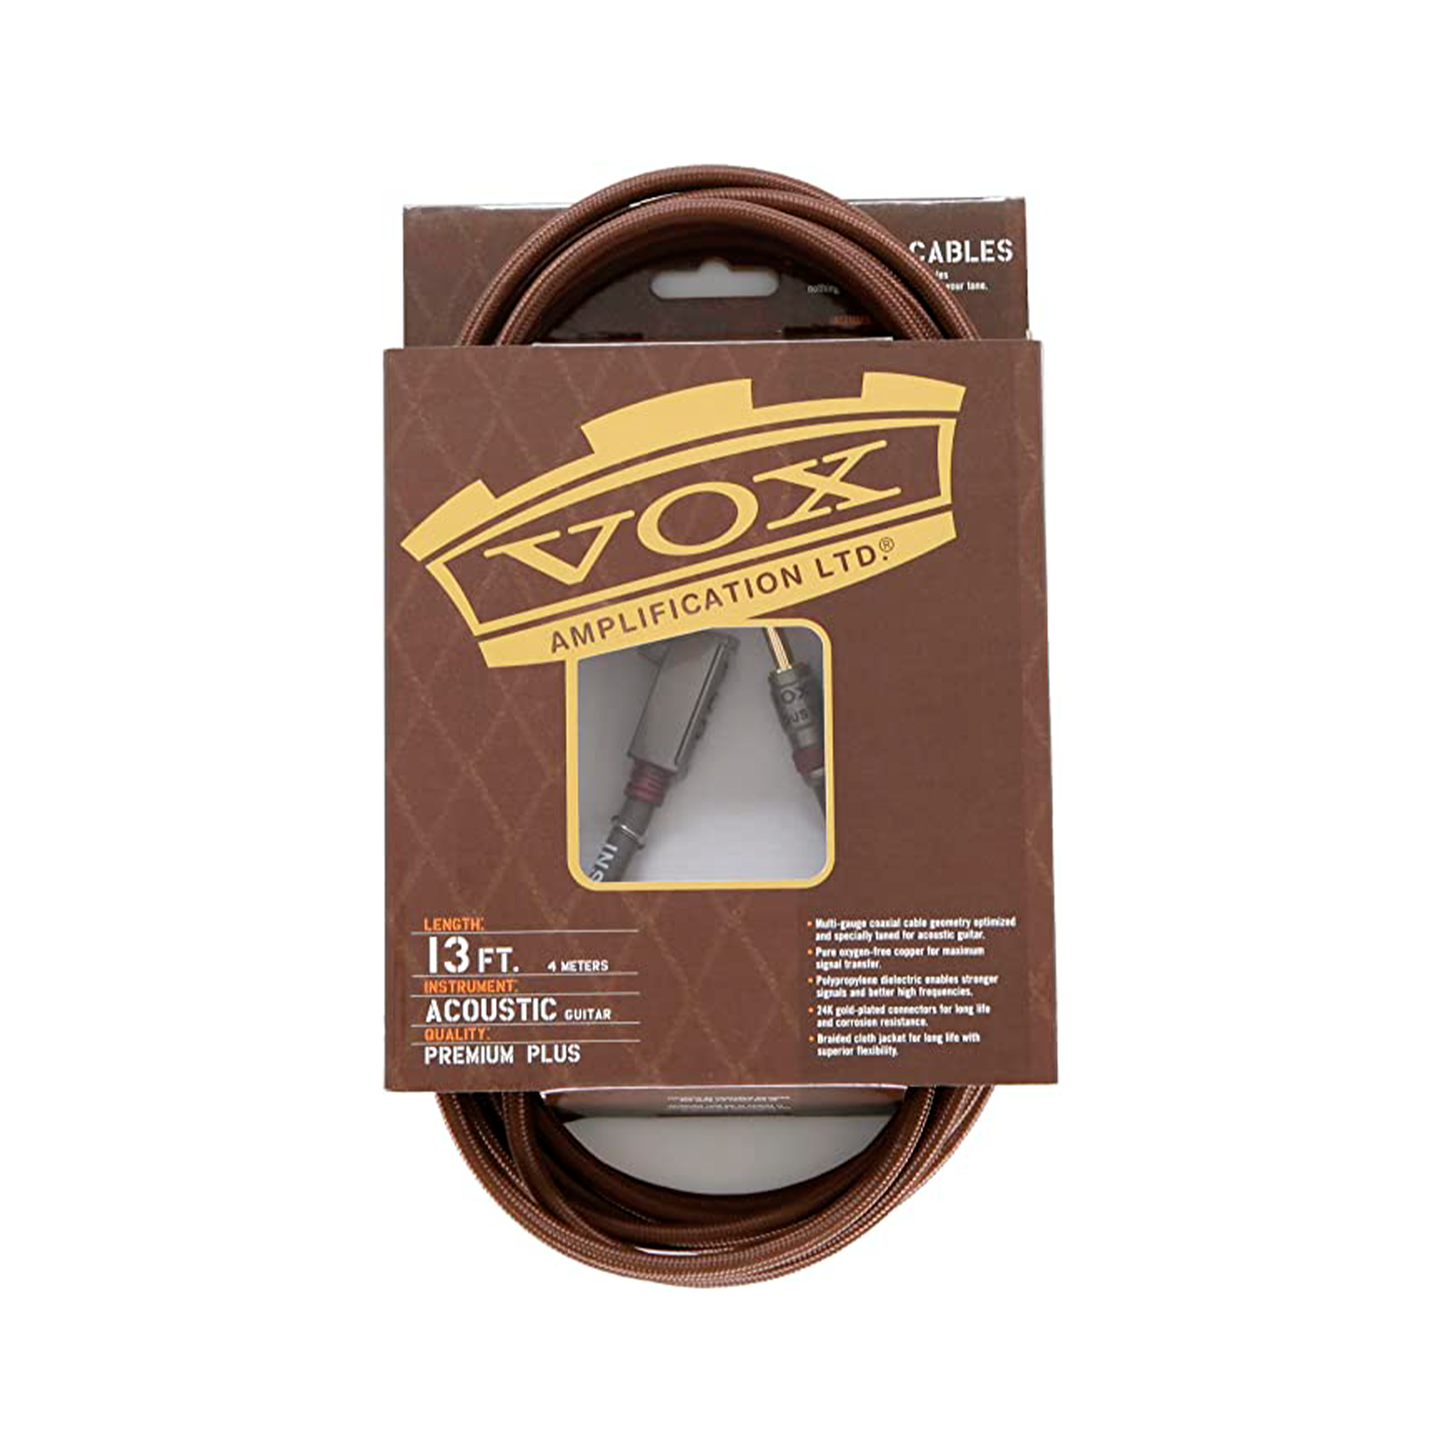 Vox Class A Acoustic Cable - 13ft (4 metros)